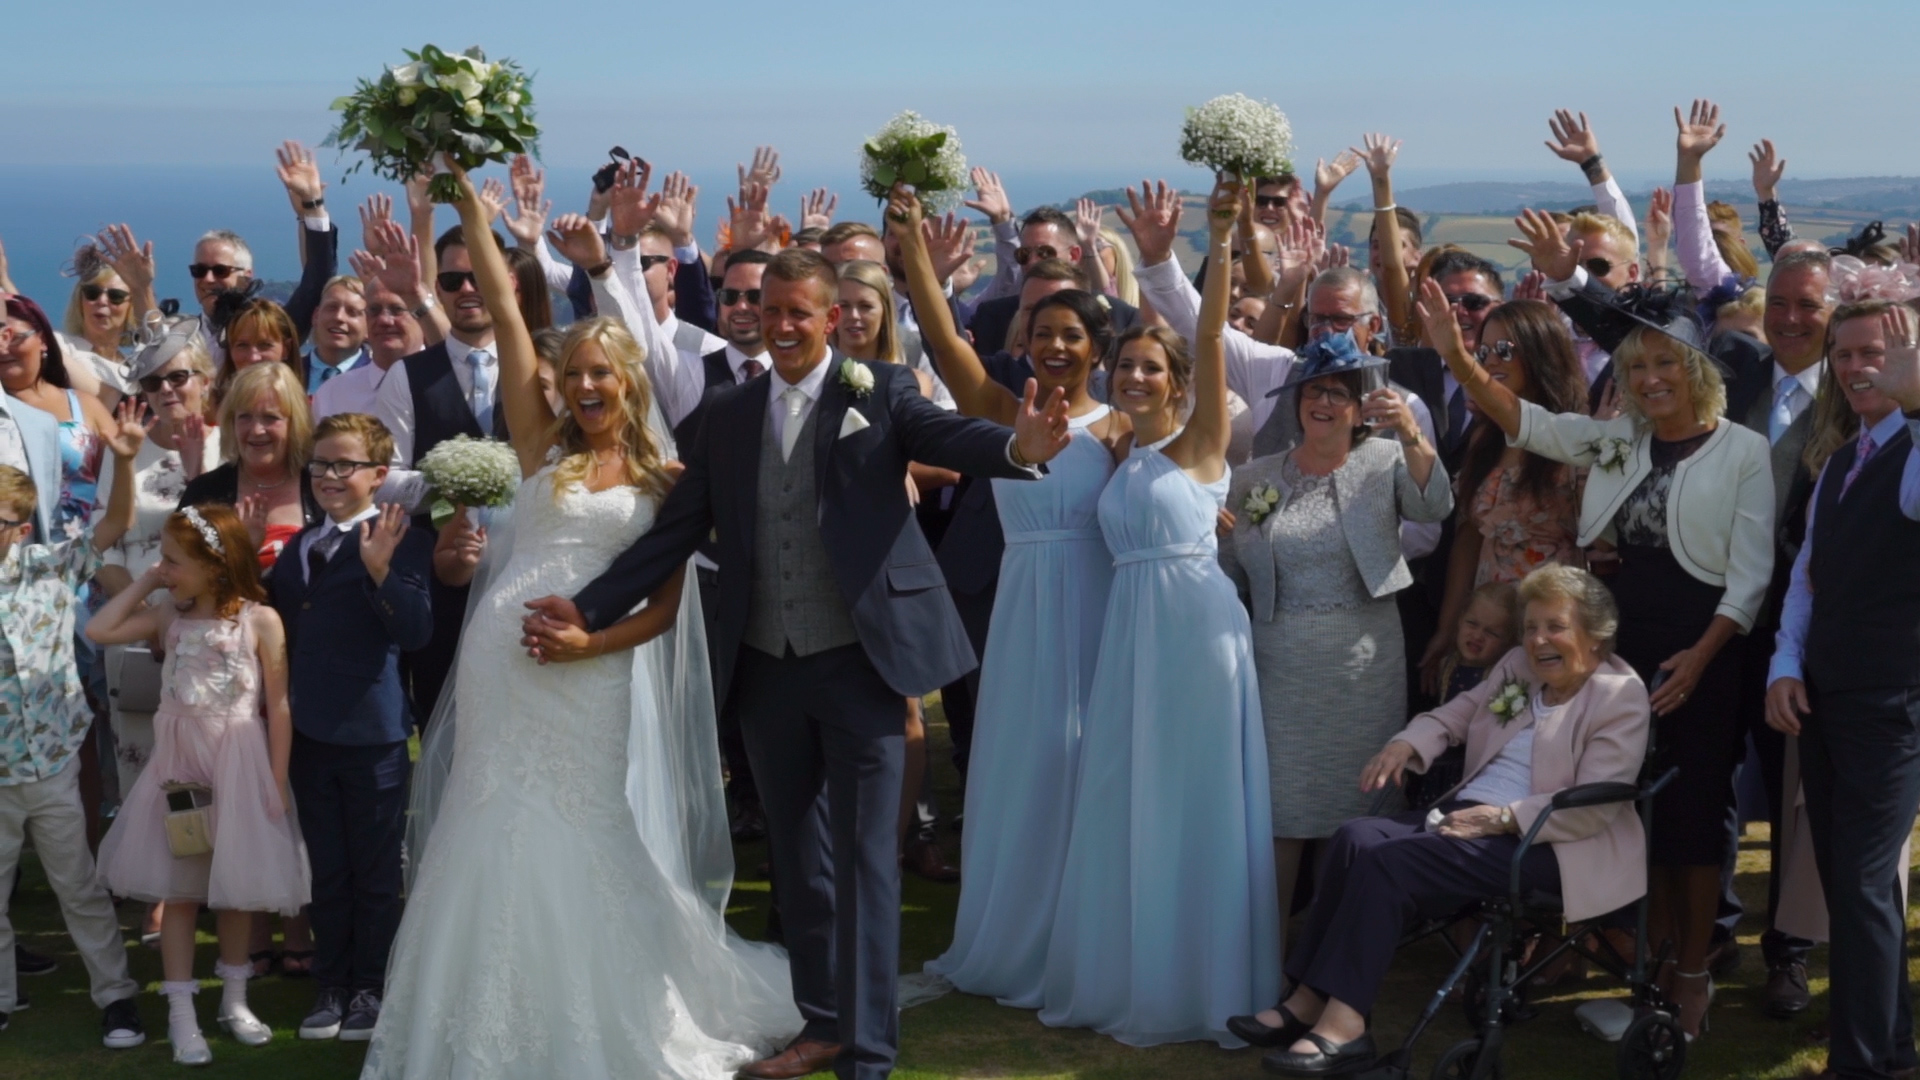 Cornwall wedding